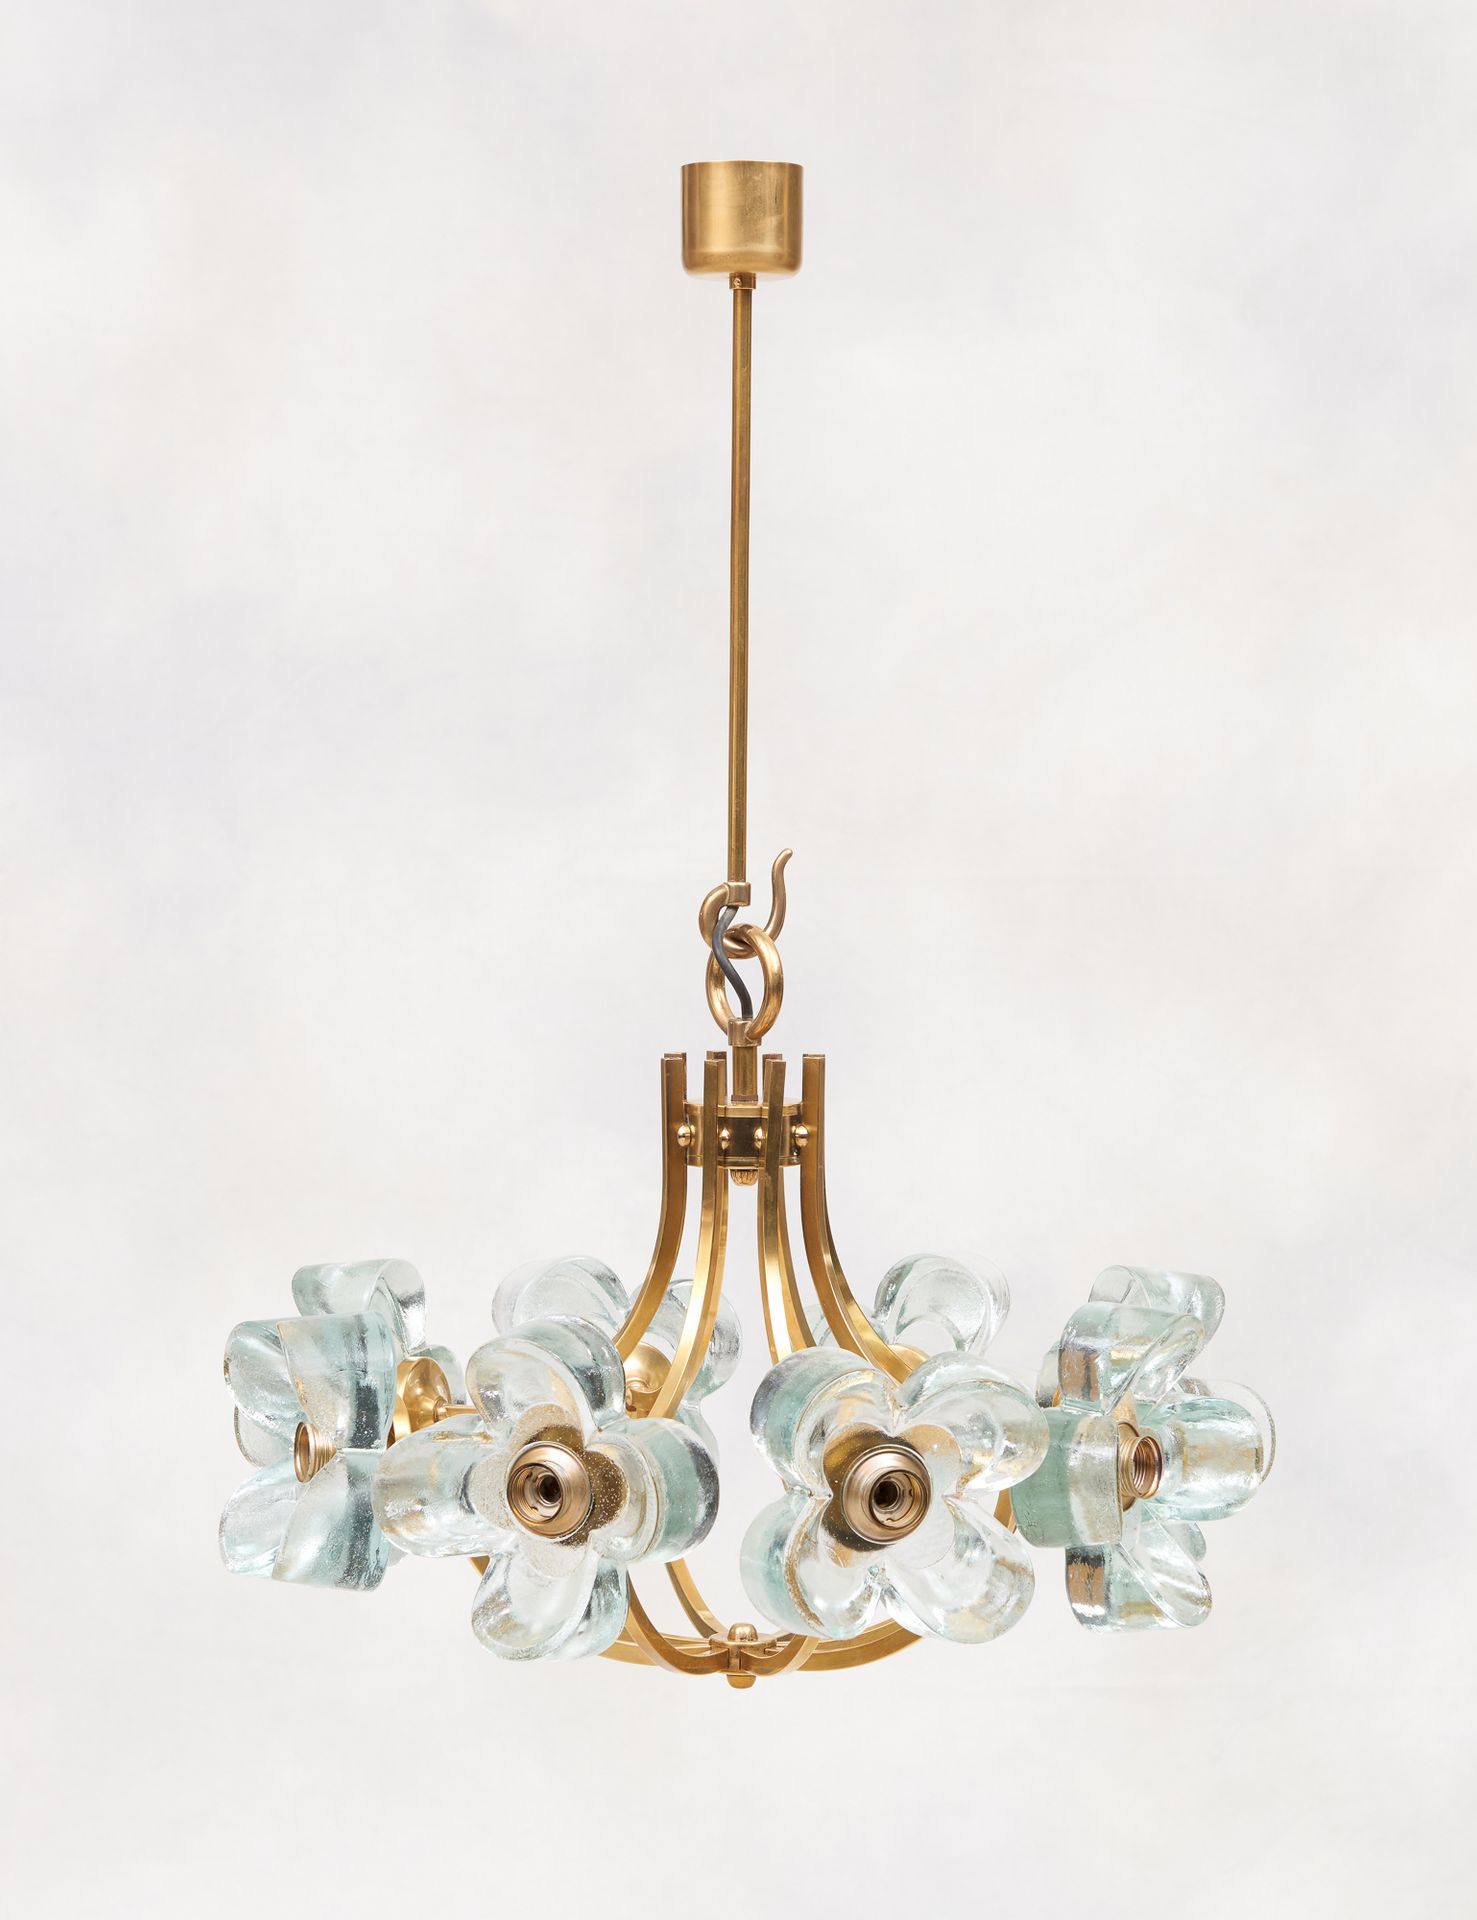 Design Simon et Schelle, circa 1960. 灯具：黄铜吊灯，有八个灯臂，玻璃灯芯有花纹设计。 

尺寸：高87，直径60厘米。